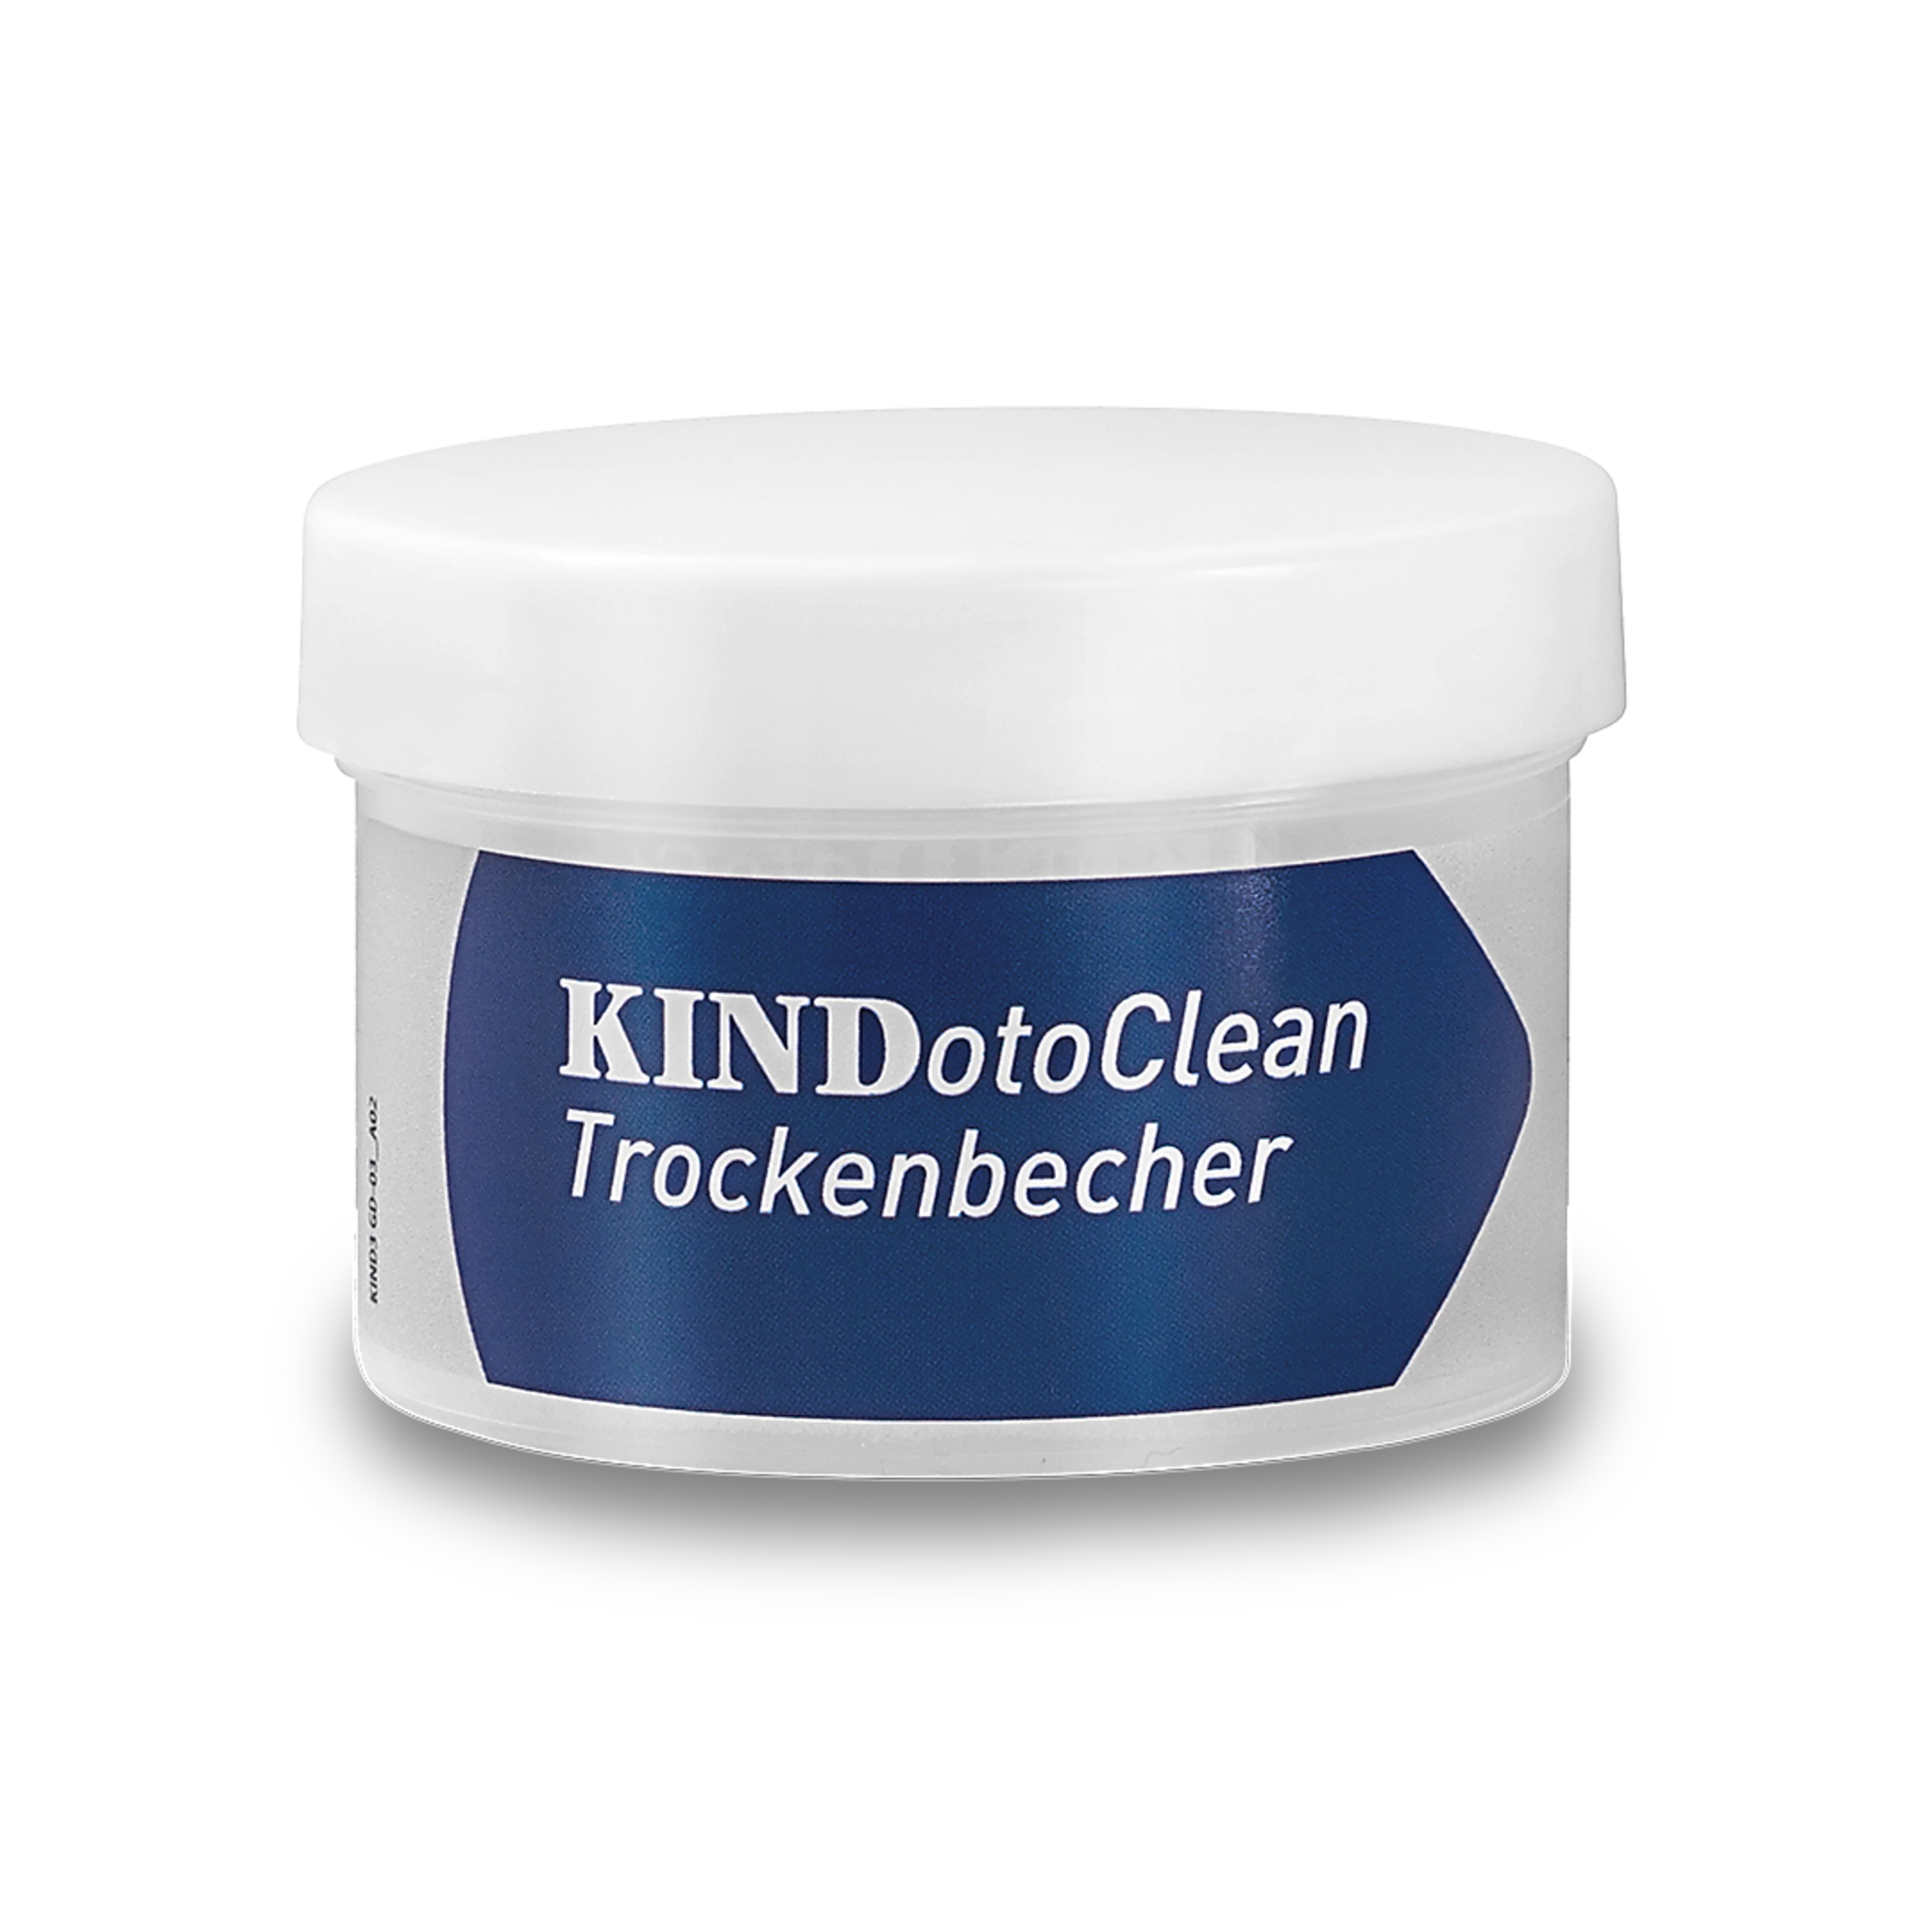 KINDotoClean Trockenbecher